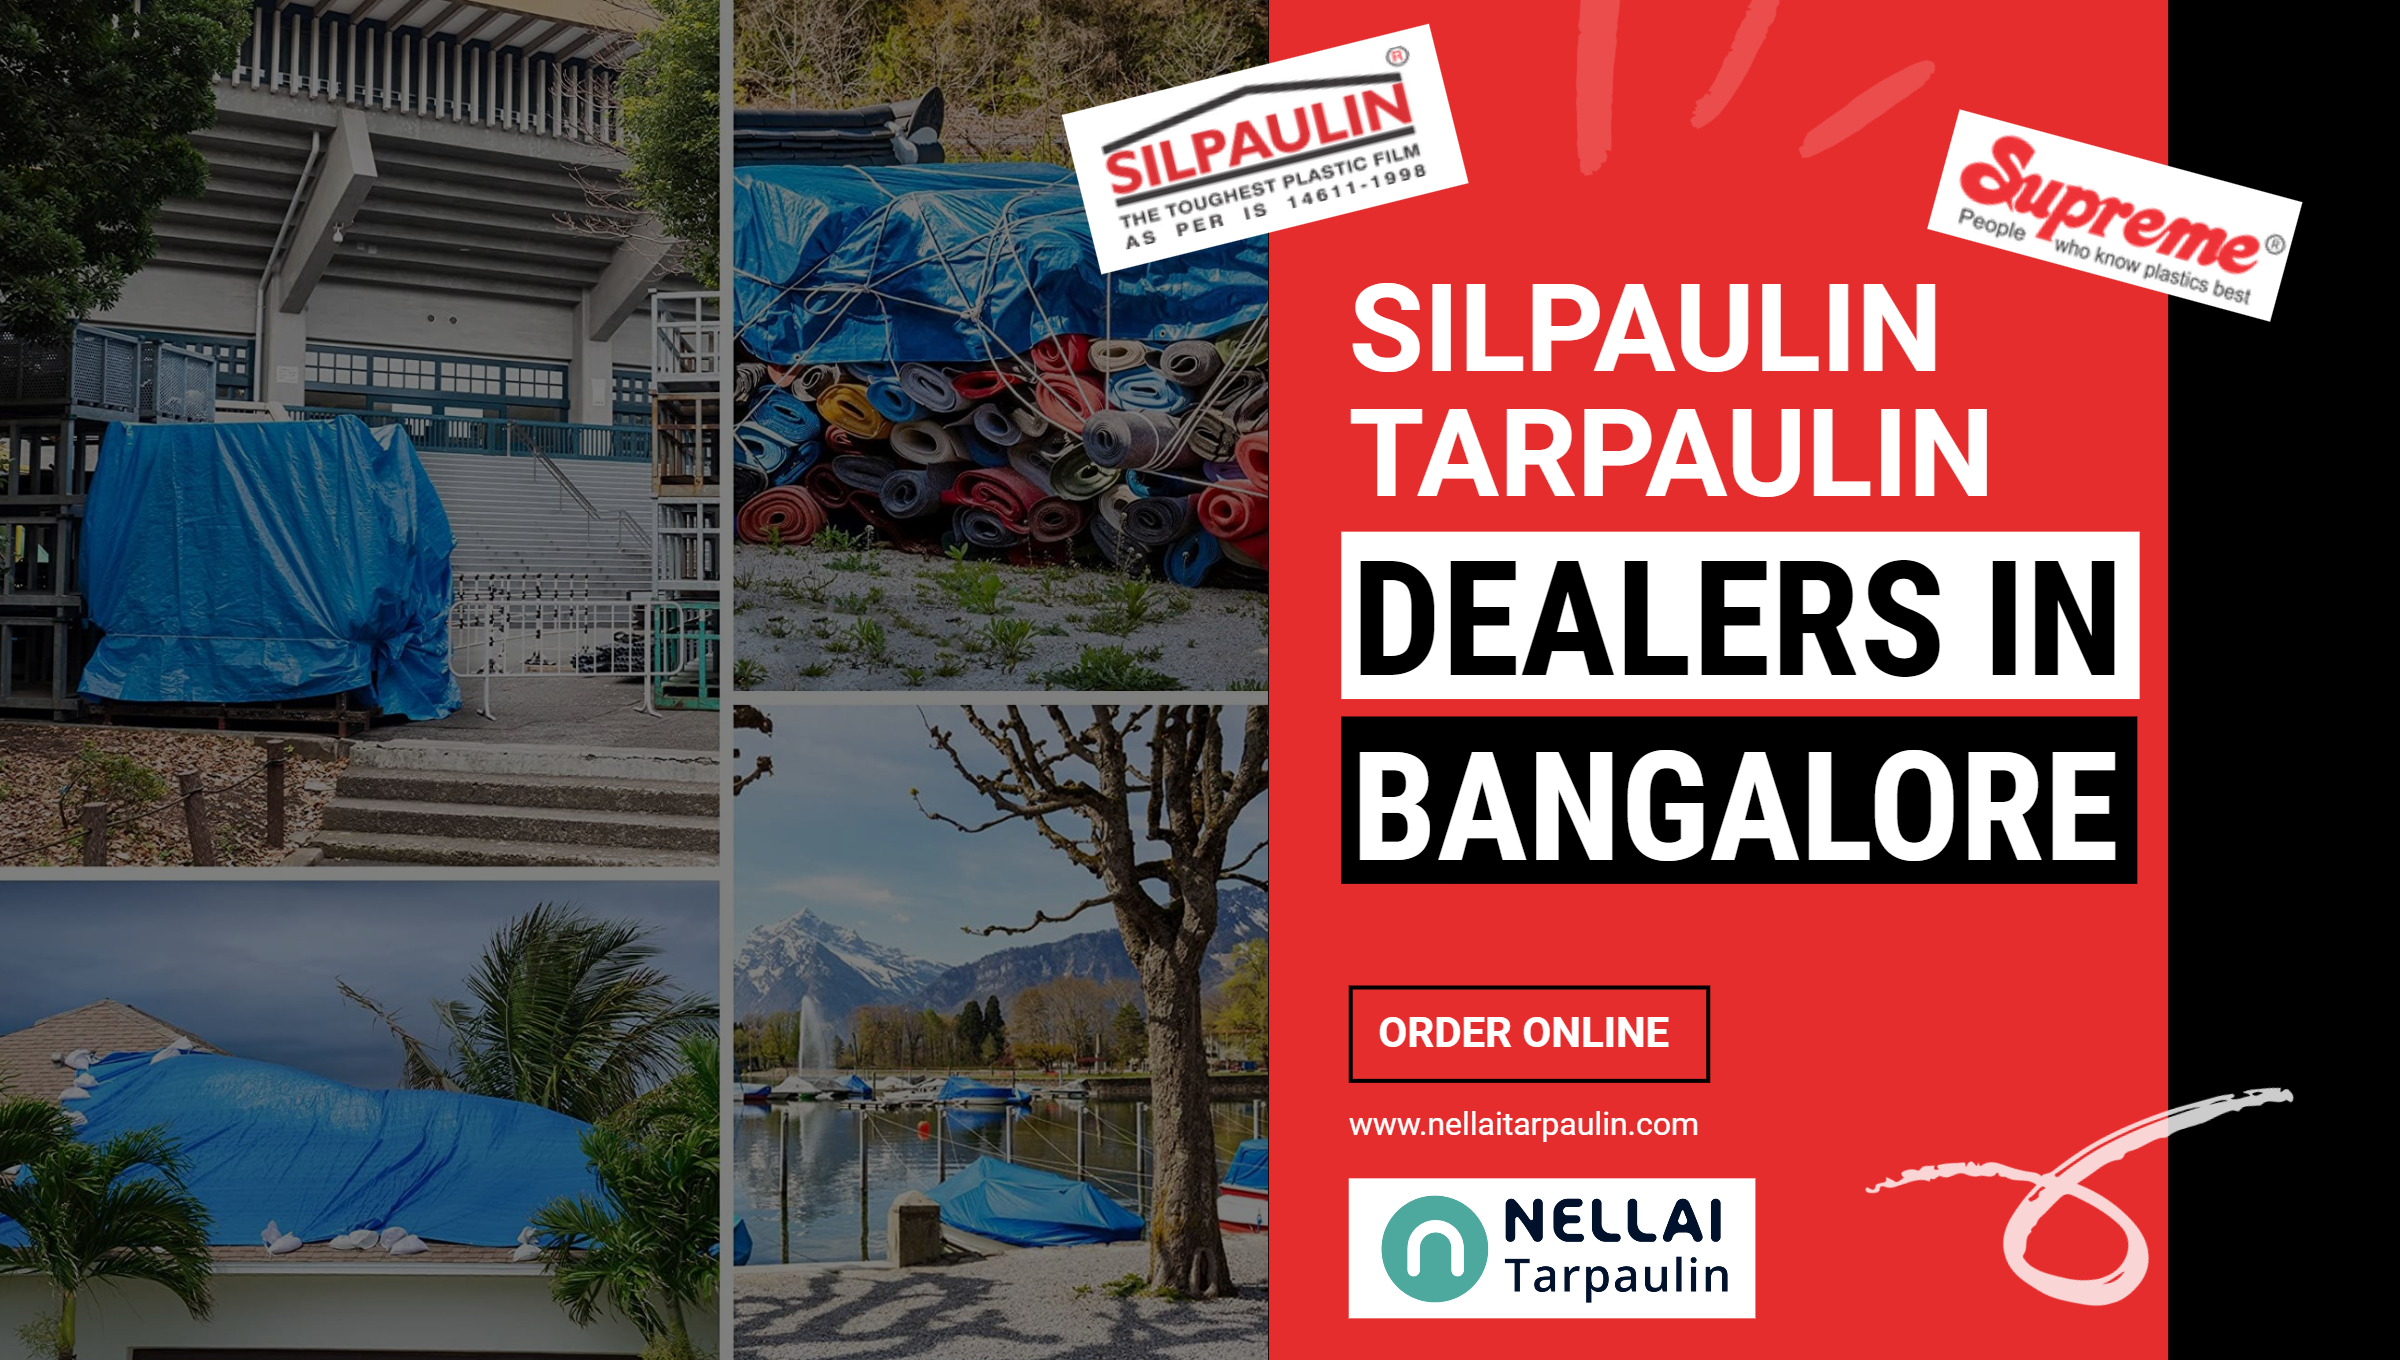 Silpaulin Tarpaulin Dealers in Bangalore